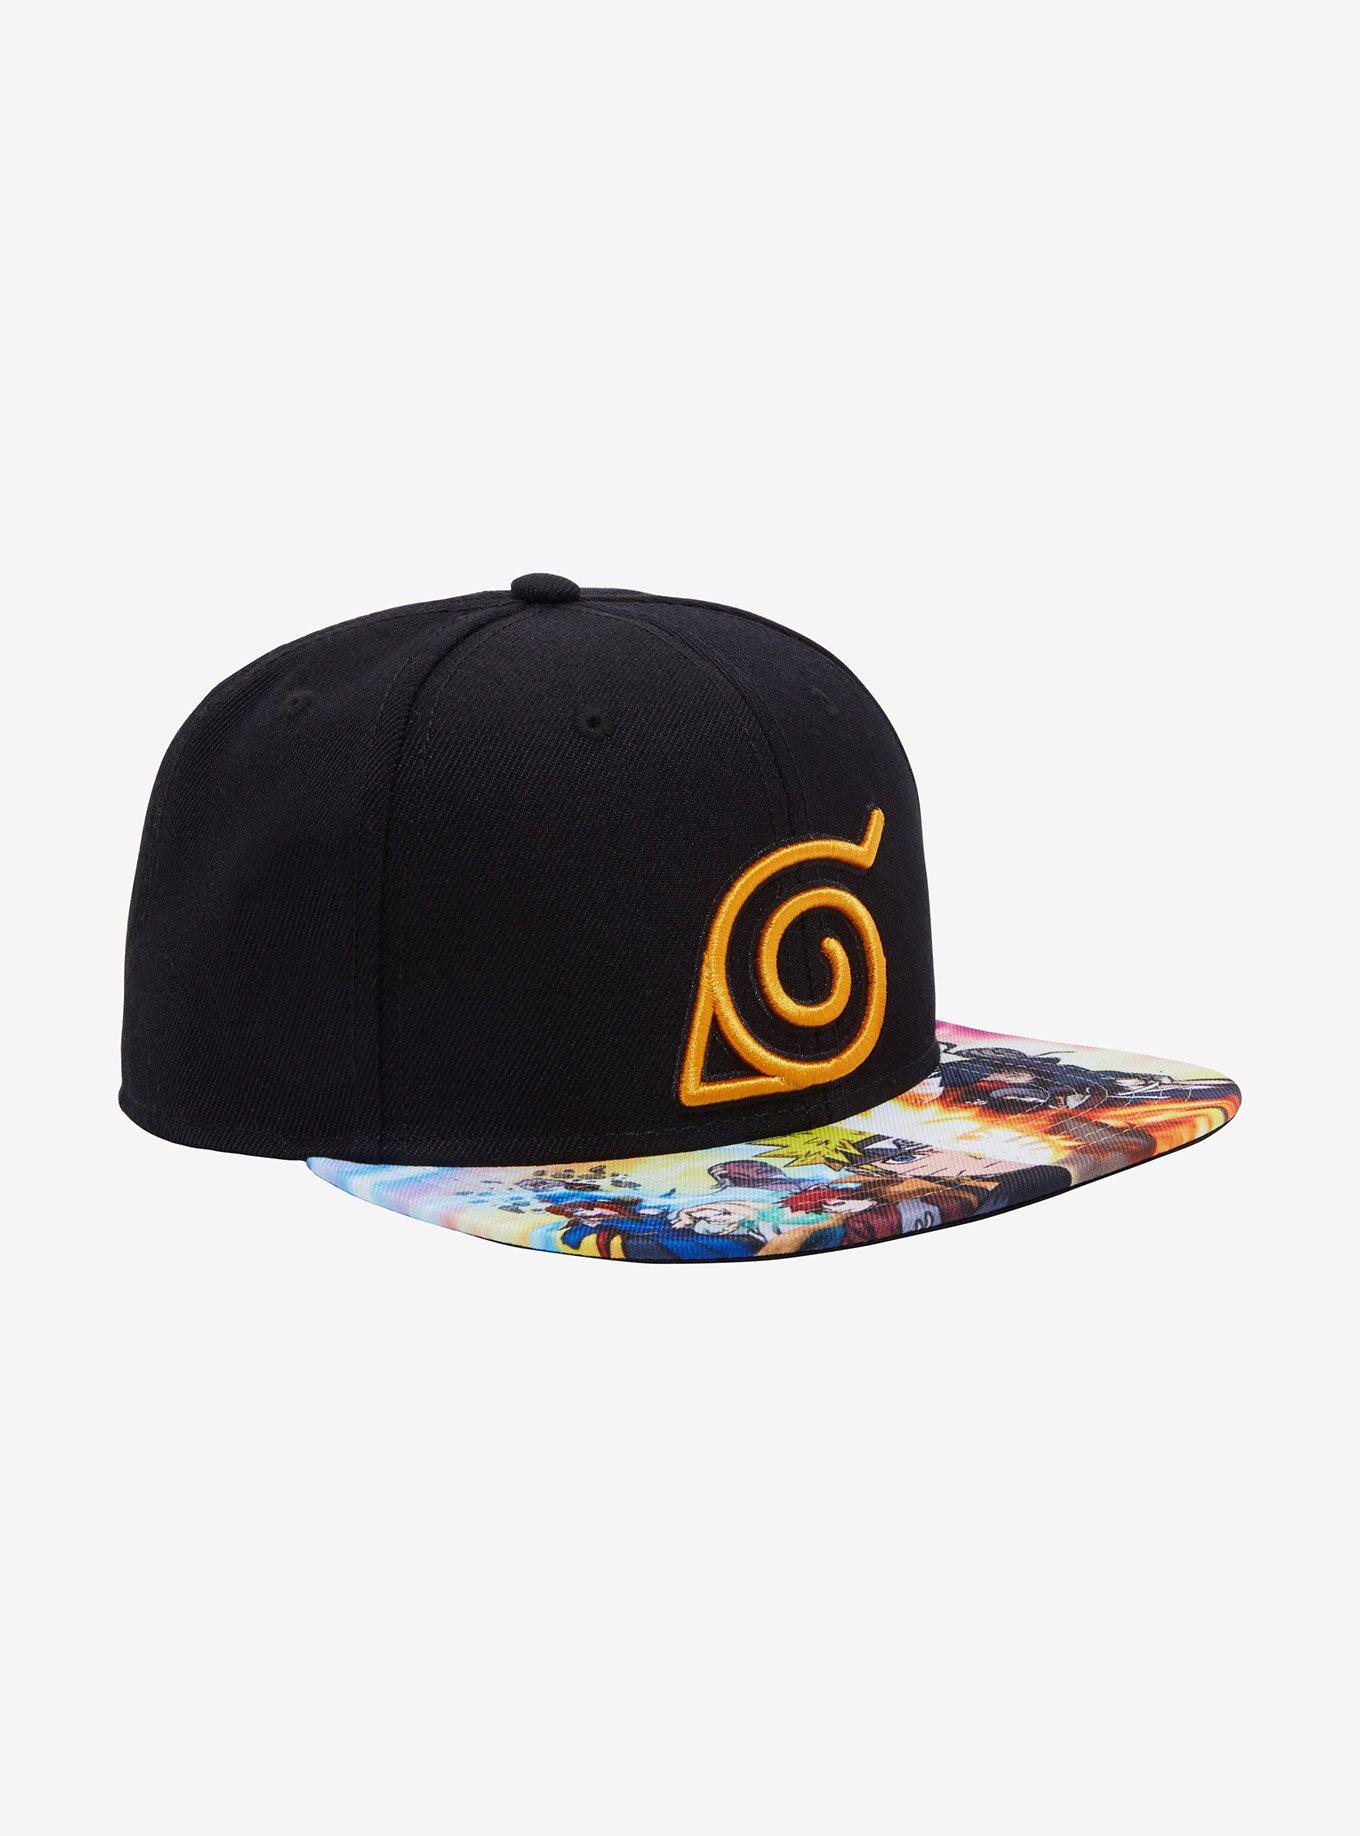 Naruto Shippuden Good Vs. Evil Snapback Hat, , hi-res